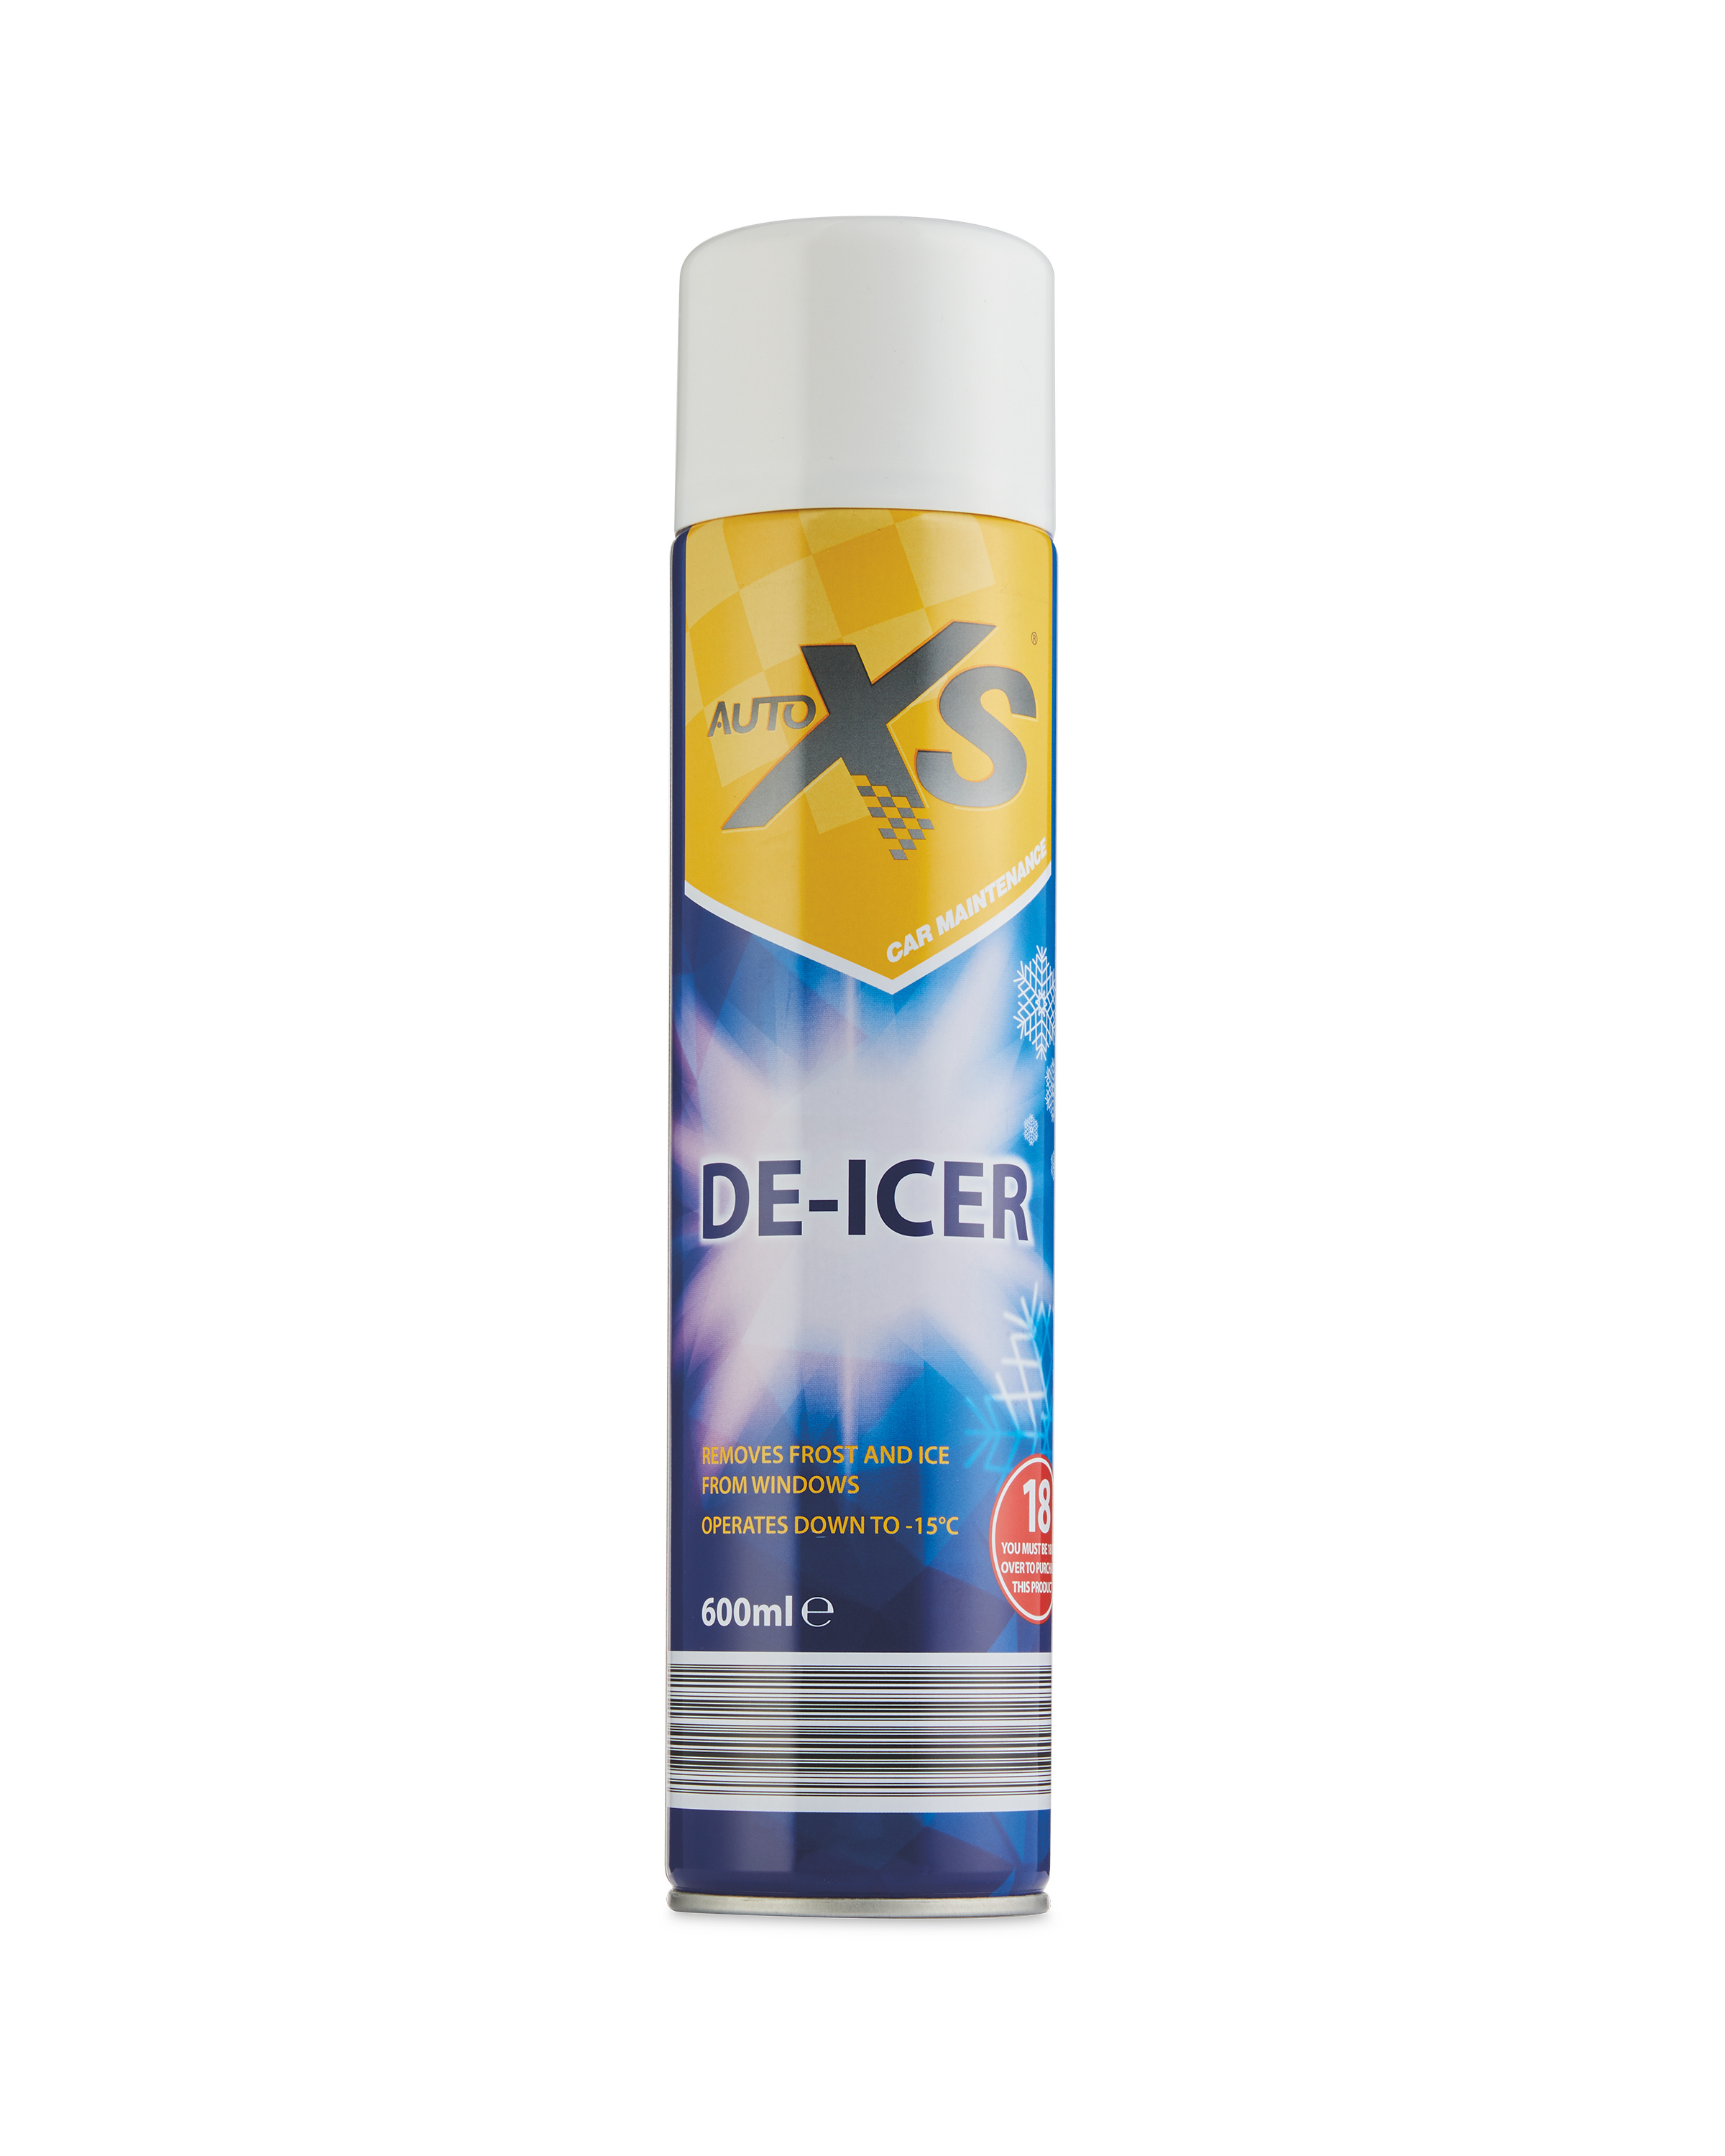 AutoXs De-Icer Spray - ALDI UK